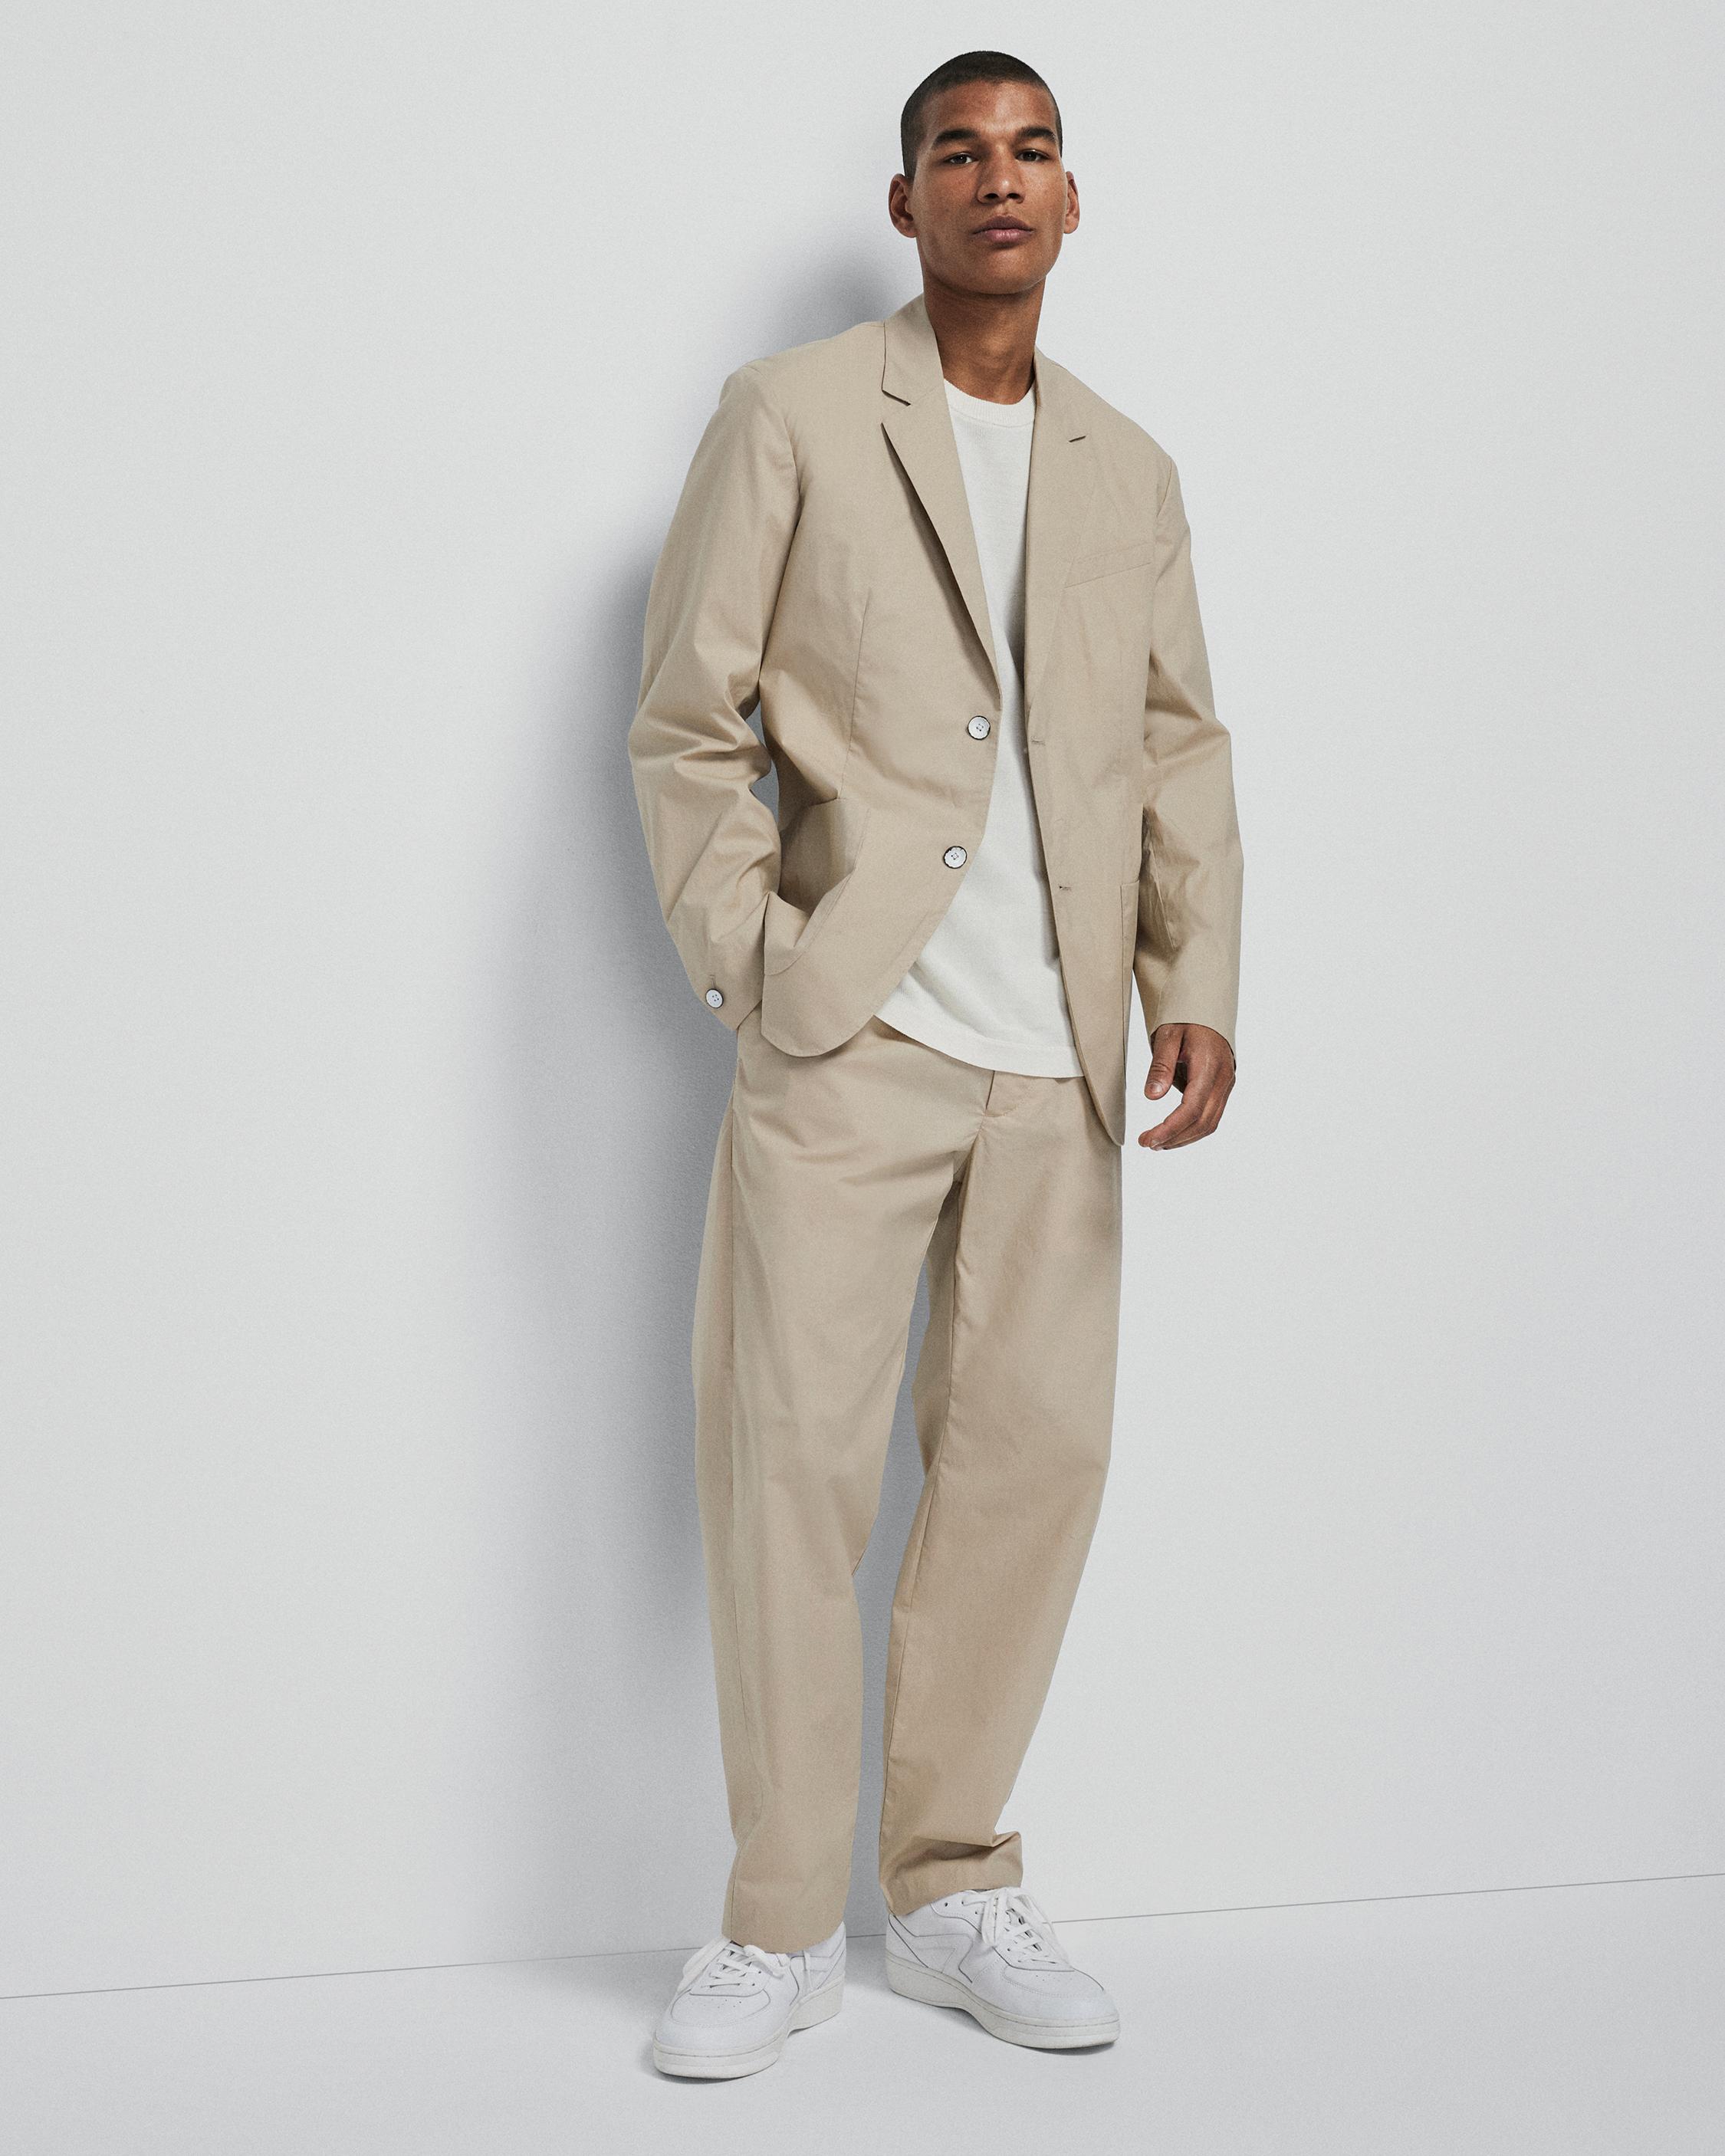 Shop Blazers for Men in Sleek, Modern Styles | rag & bone